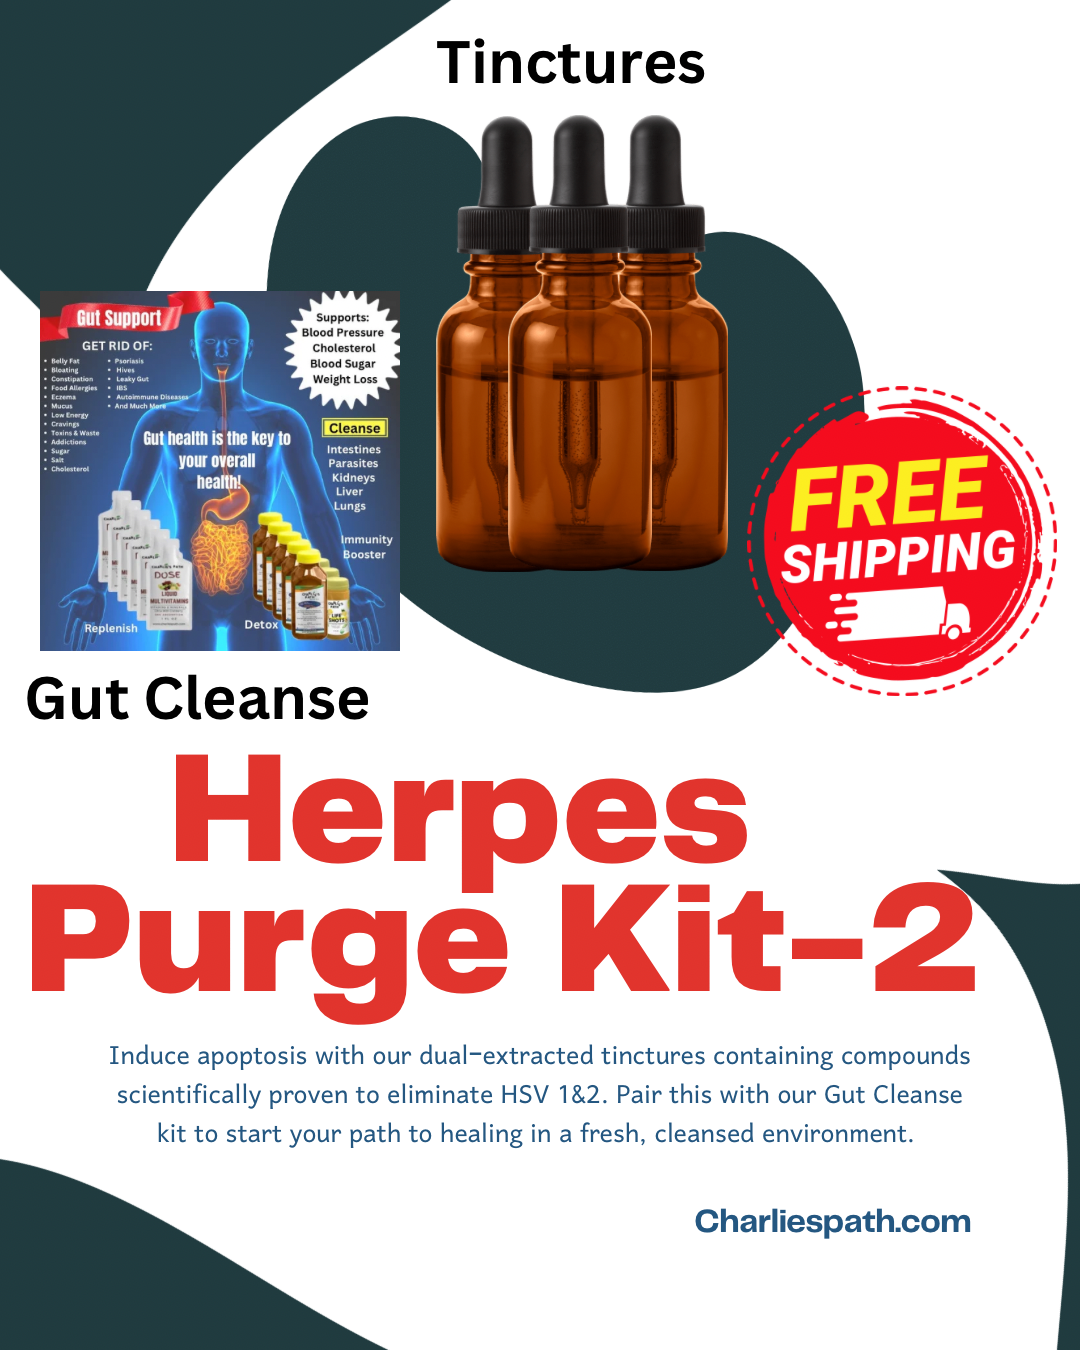 Herpes Purge Kit